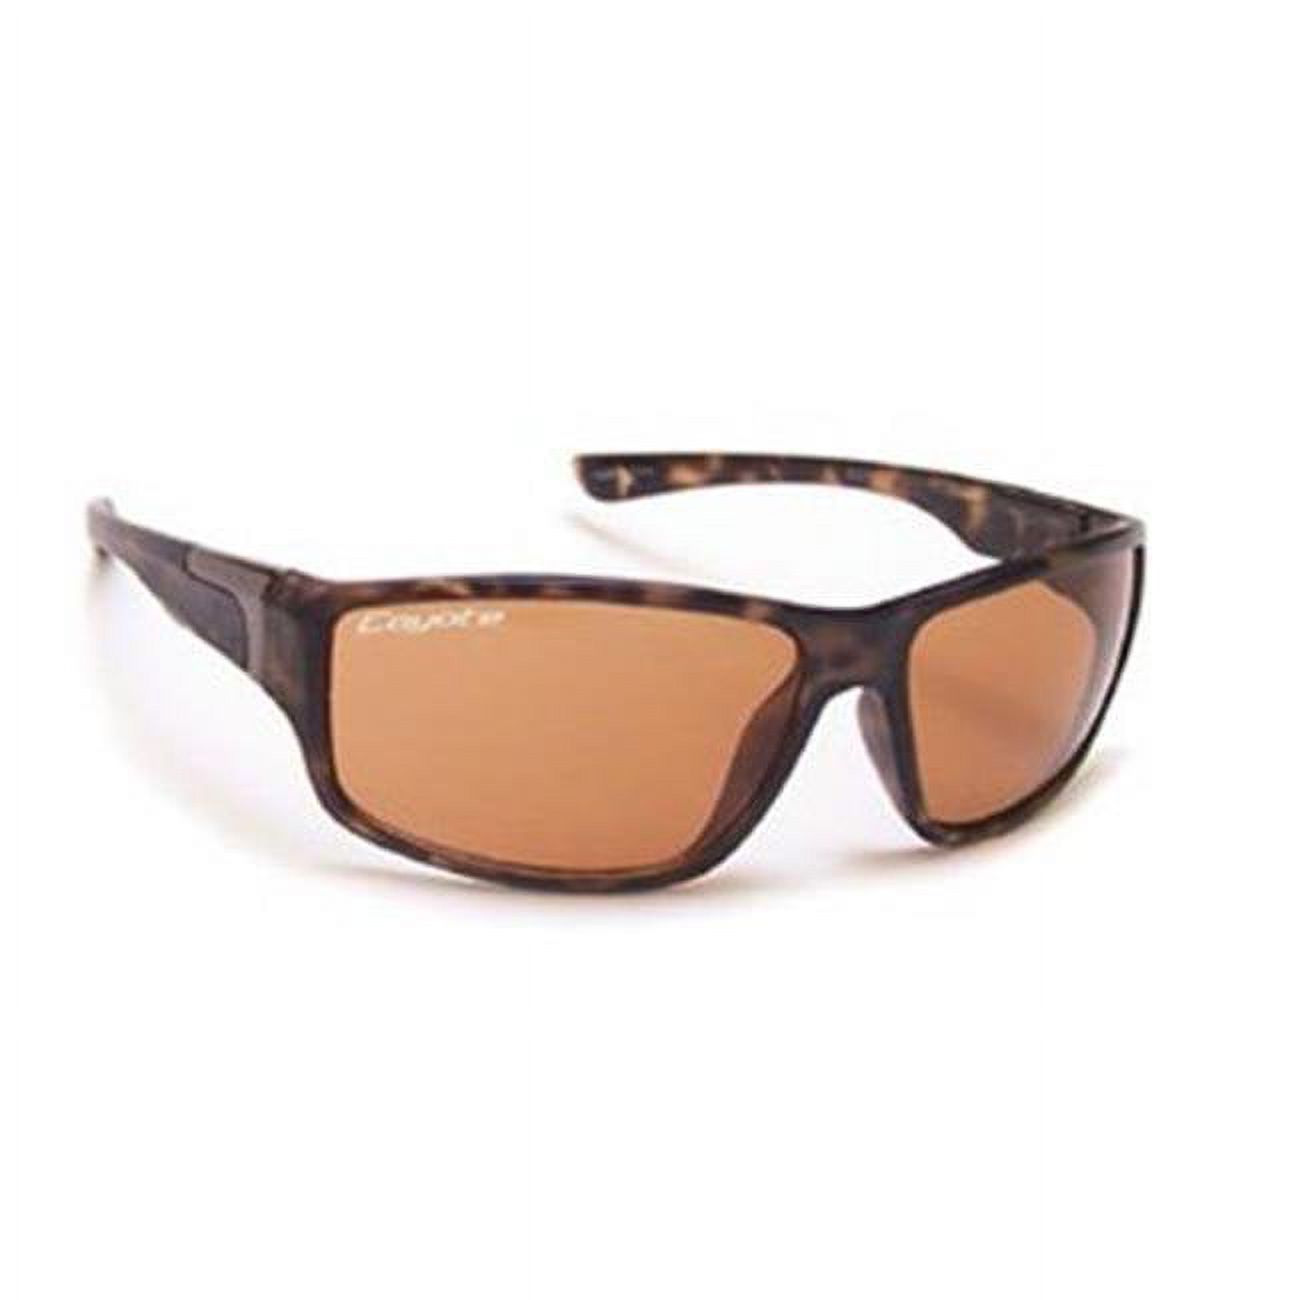 Coyote Eyewear P-37 tortoise-brown Sportsmen Series Polarized Sunglasses - image 1 of 4